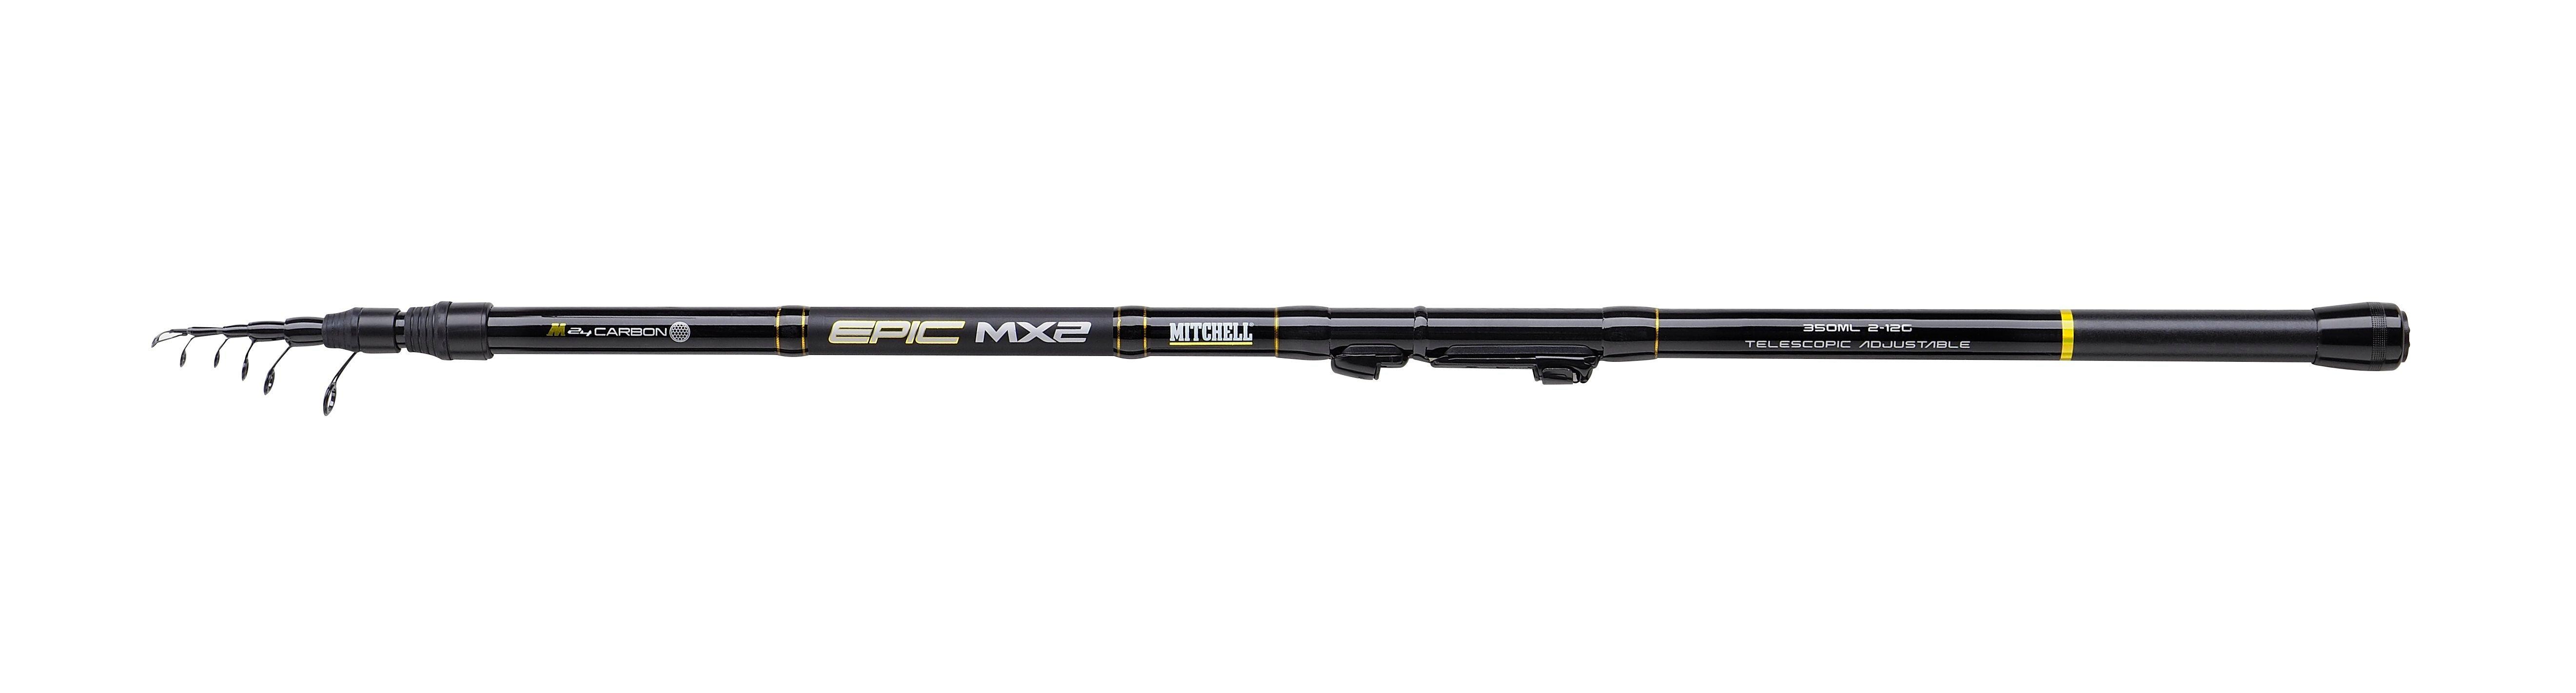 Canne flotteur ajustable Mitchell Epic MX2 Tele Adjustable Float Rod